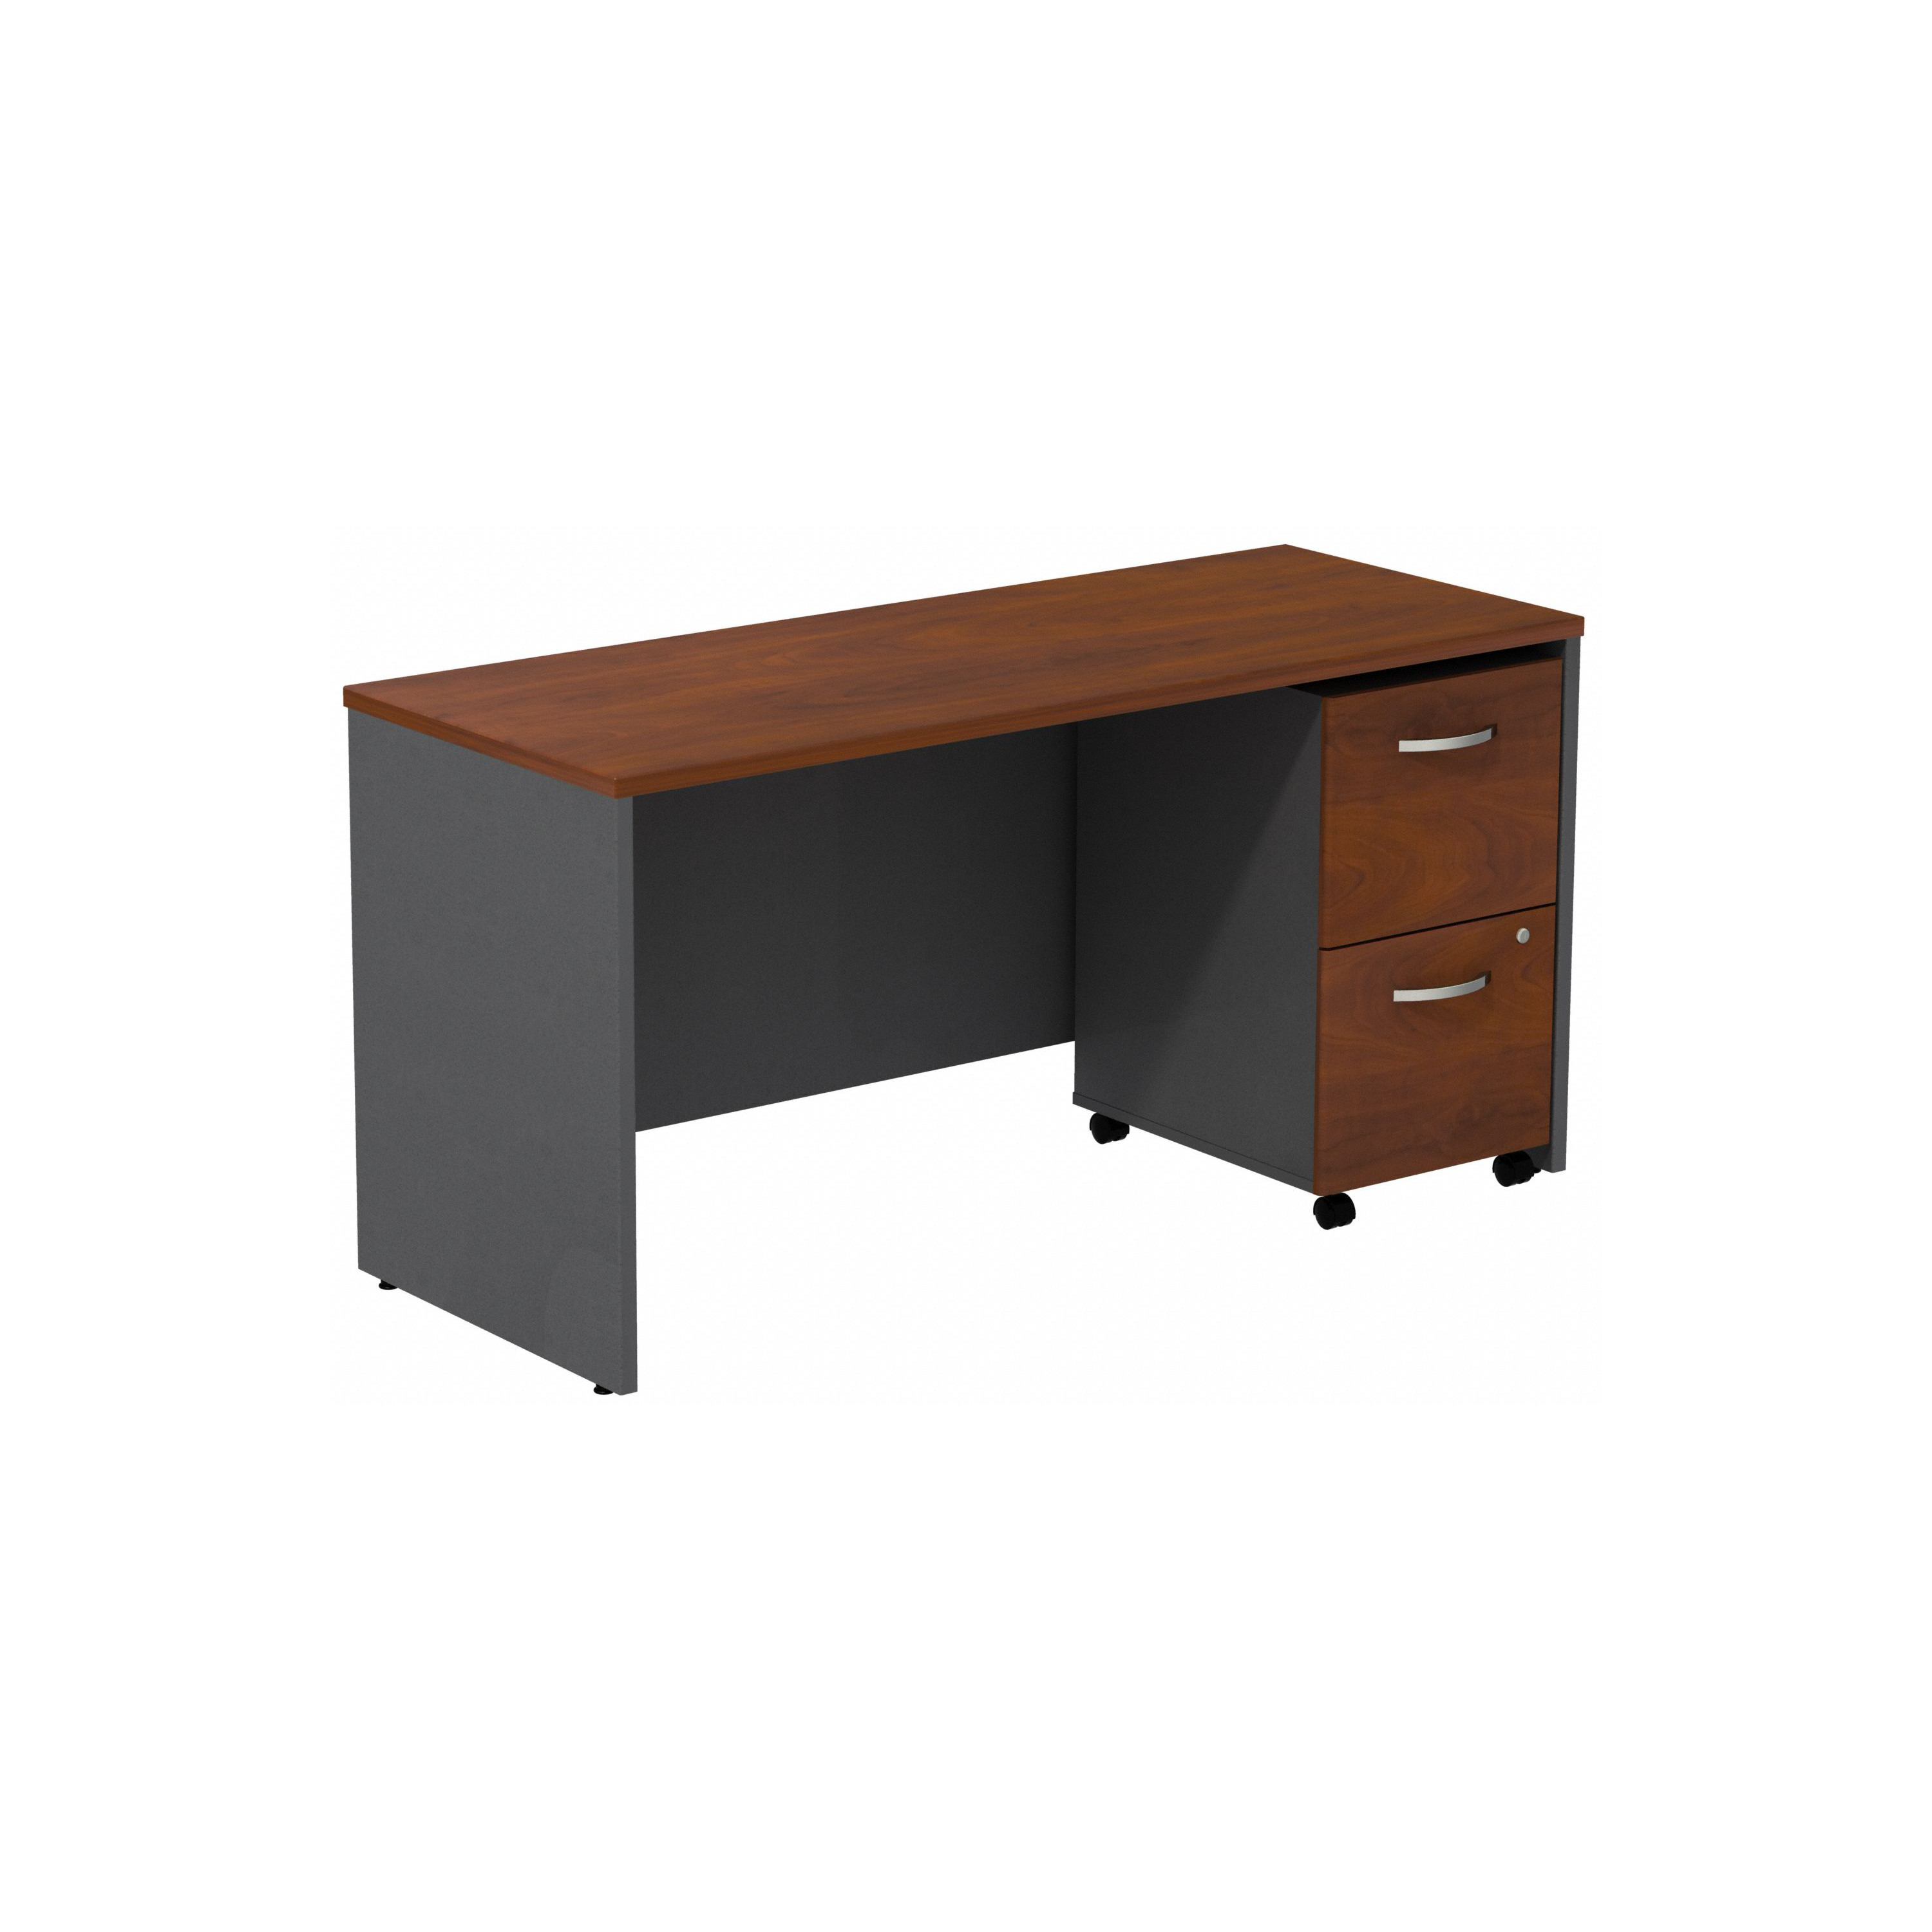 Shop Bush Business Furniture Series C Desk Credenza with 2 Drawer Mobile Pedestal 02 SRC029HCSU #color_hansen cherry